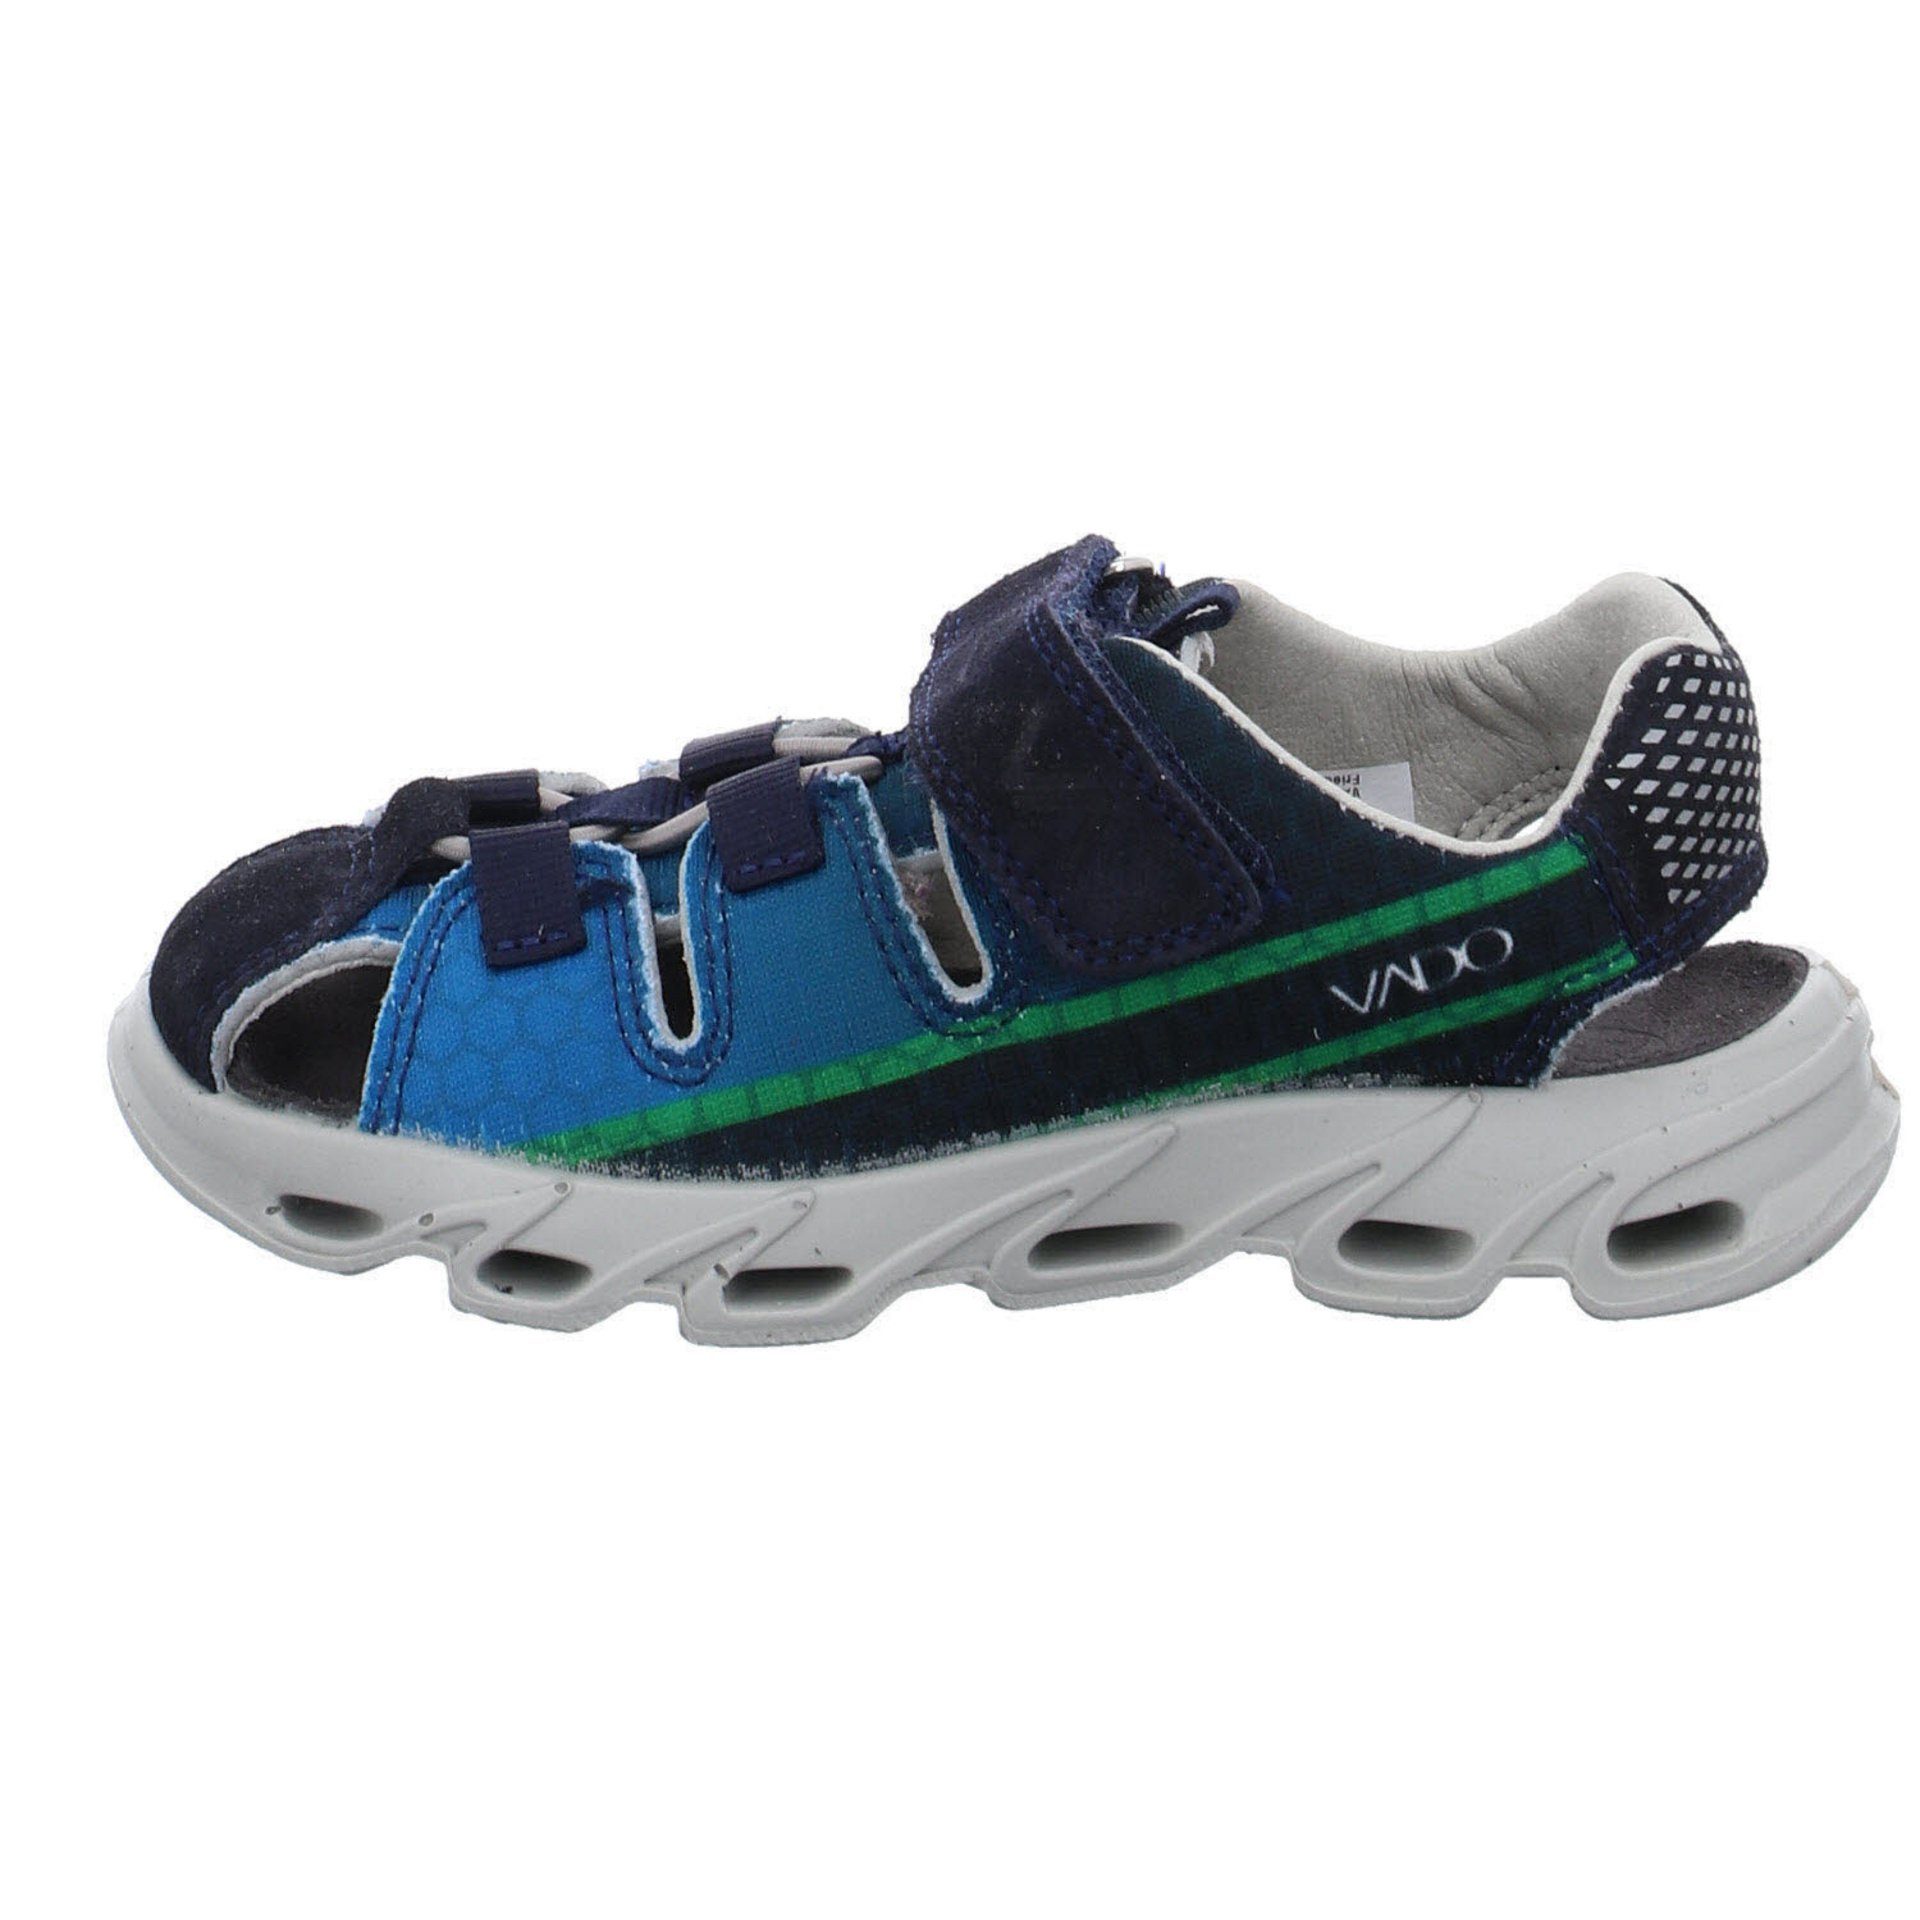 Vado Jungen Sandalen Schuhe Textil Sandale Sandale Kinderschuhe Box Blau